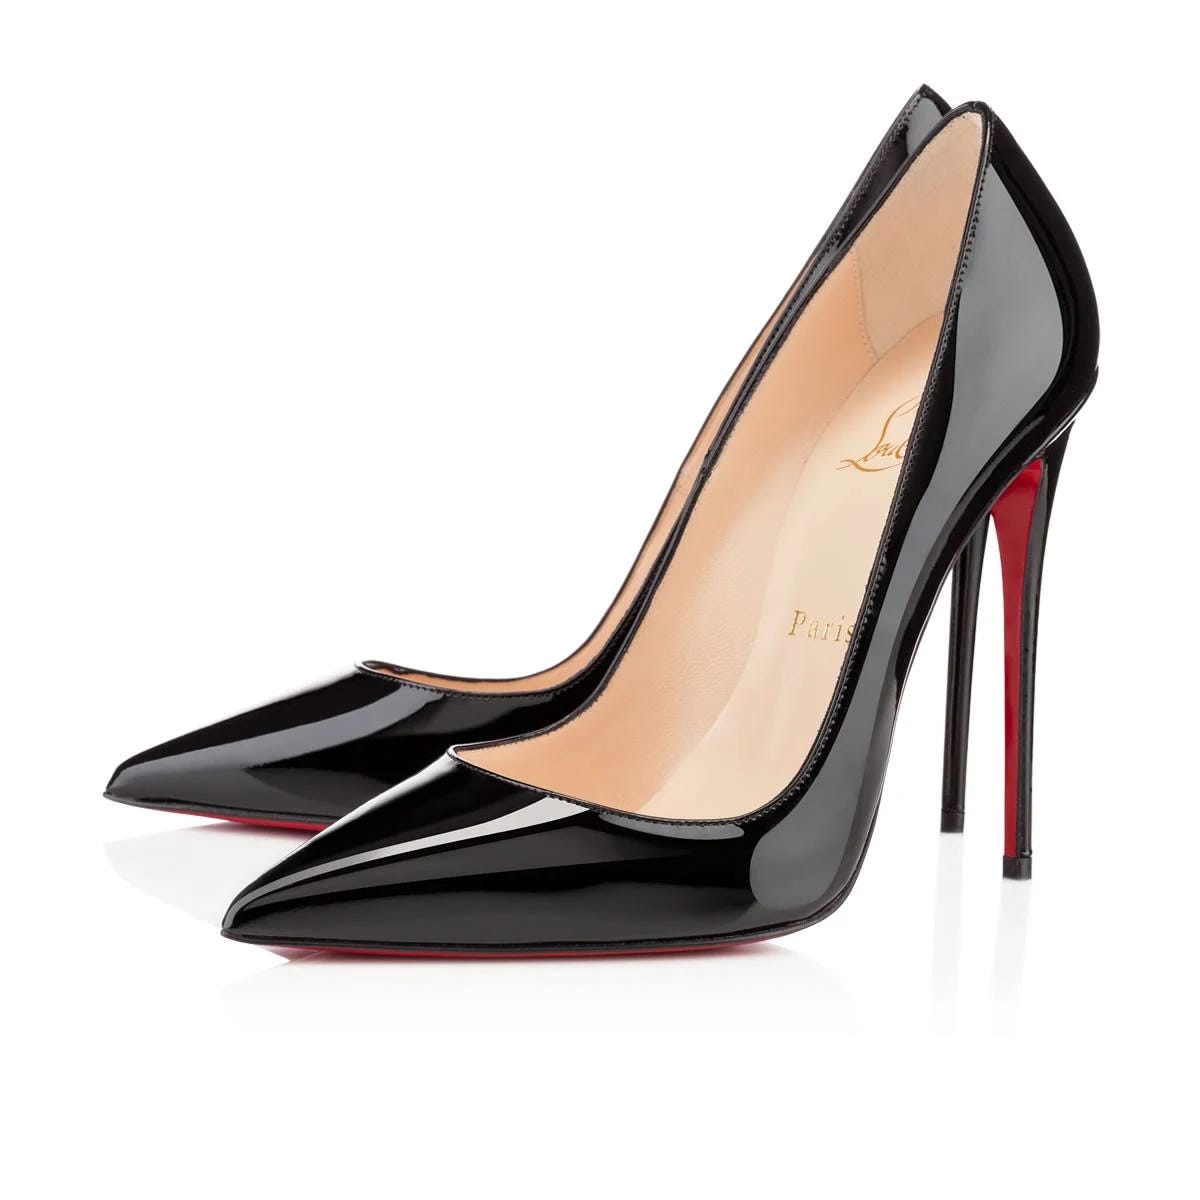 Christian Louboutin So Kate Patent Leather Heels - Iconic Black Design | Image